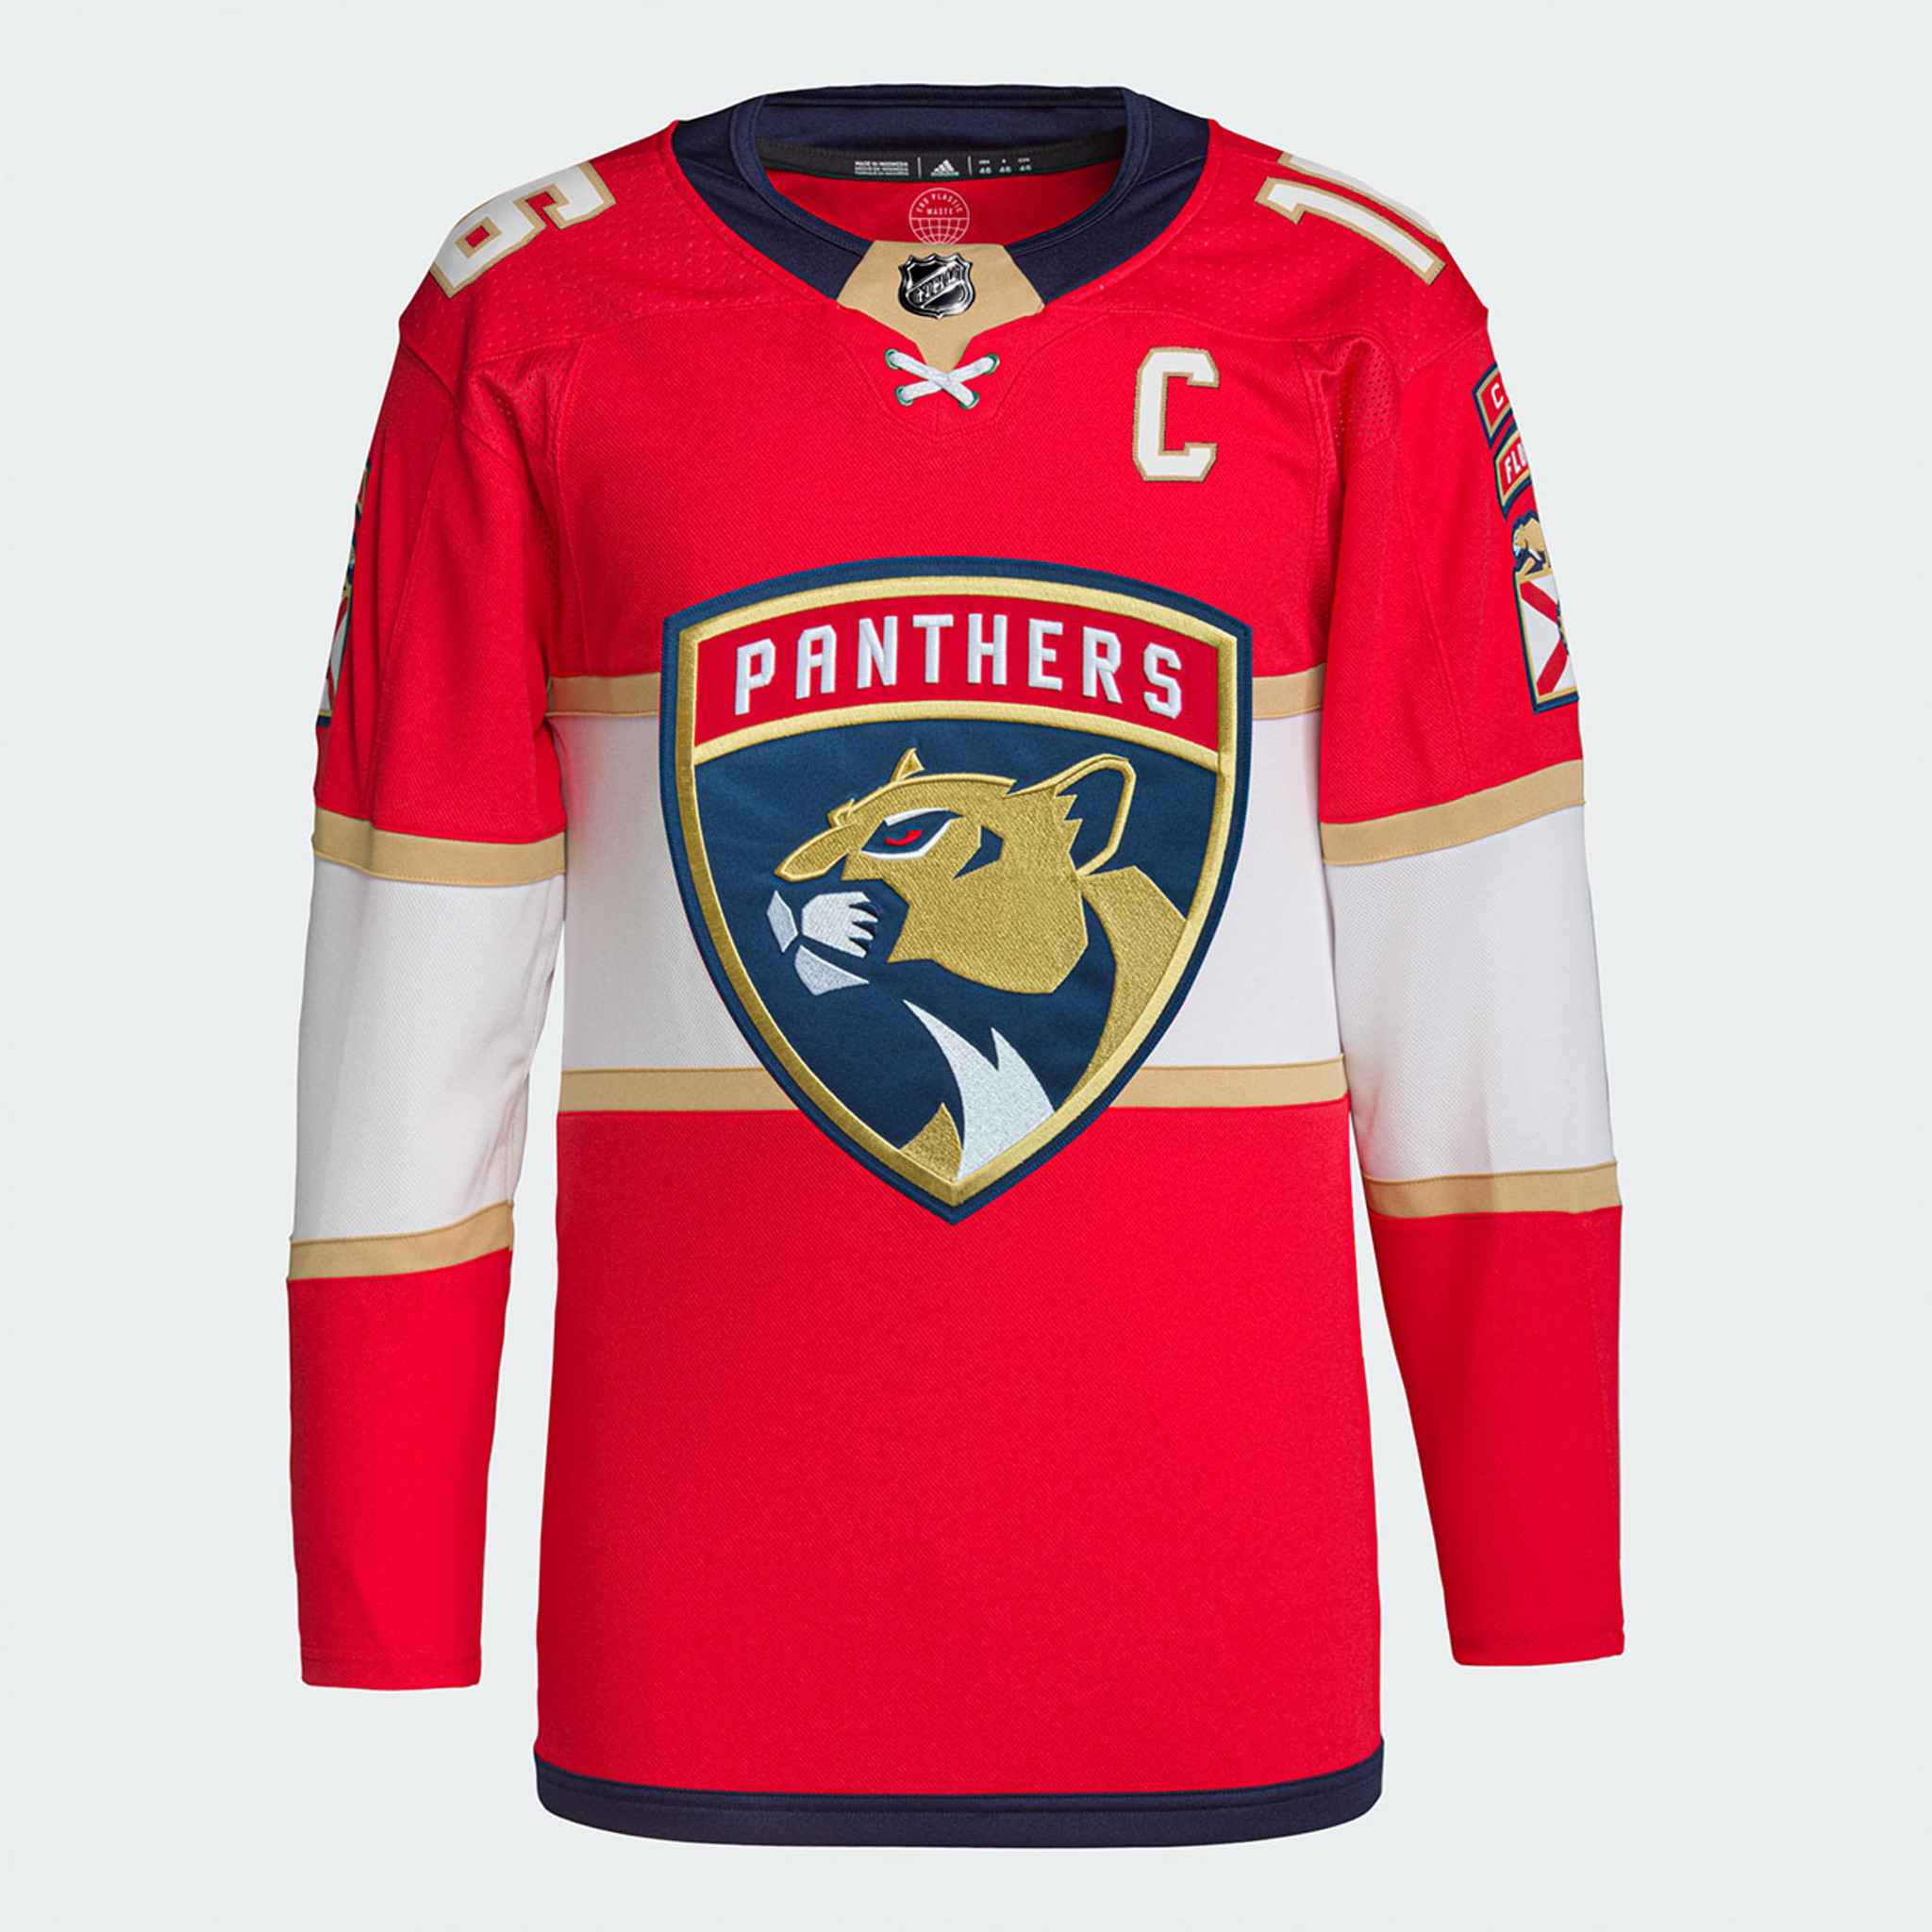 Authentic Reebok Adult Aleksander Barkov Home Jersey - NHL 16 Florida  Panthers